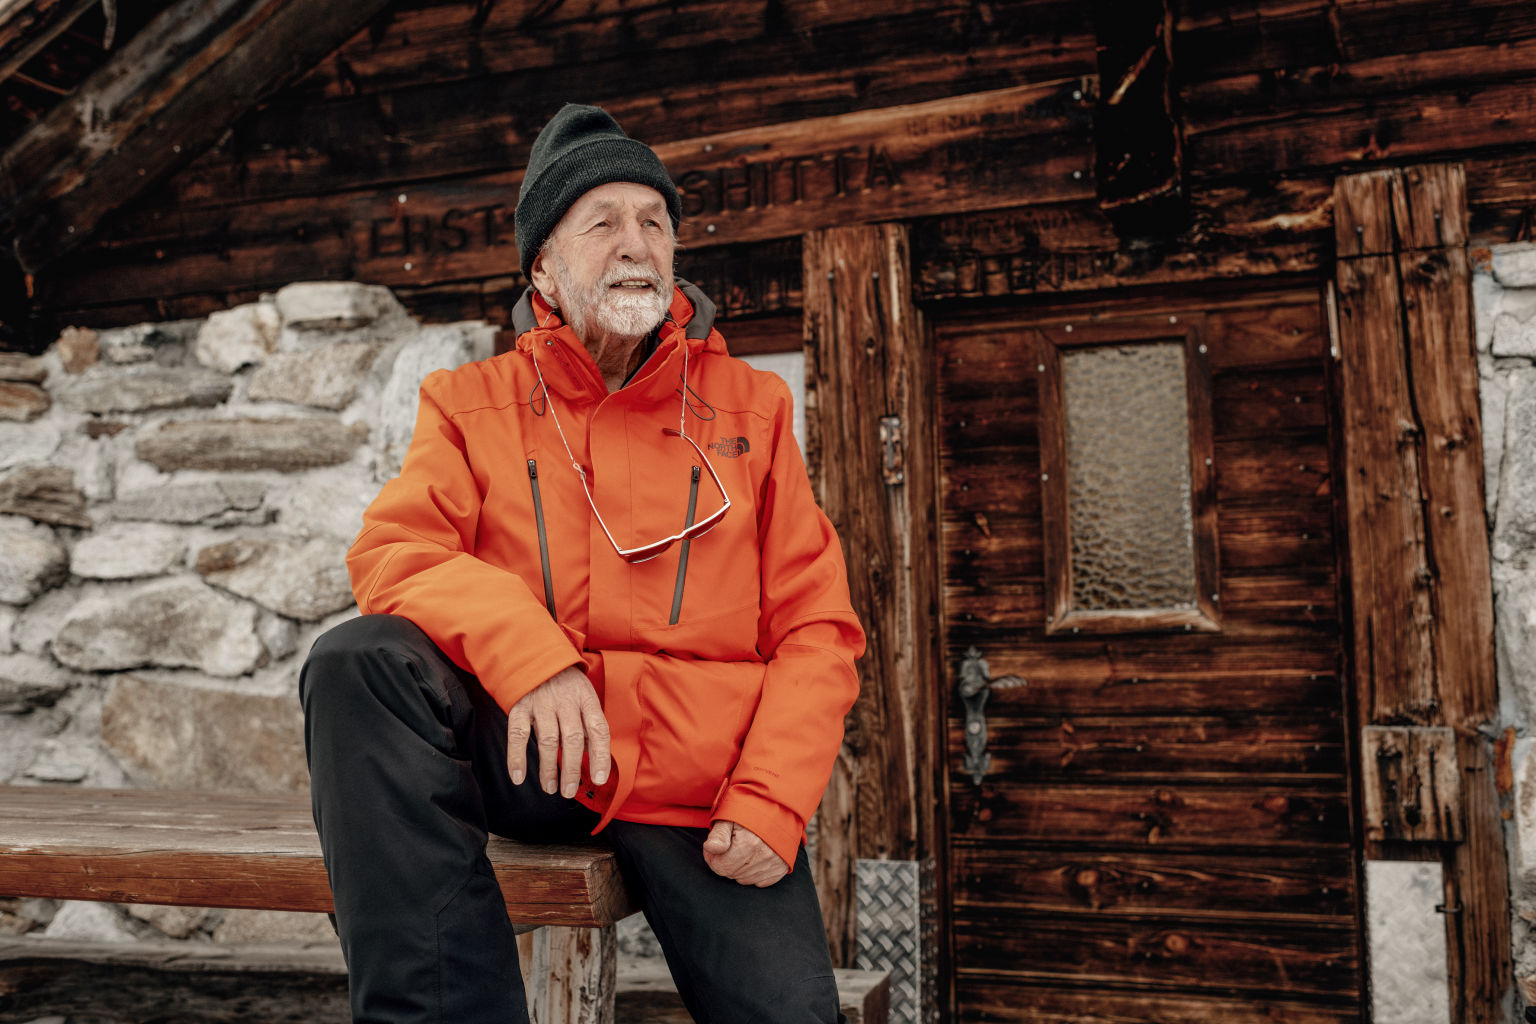 Edelbert Kummer from the story "Floating over snow", Valais, Switzerland